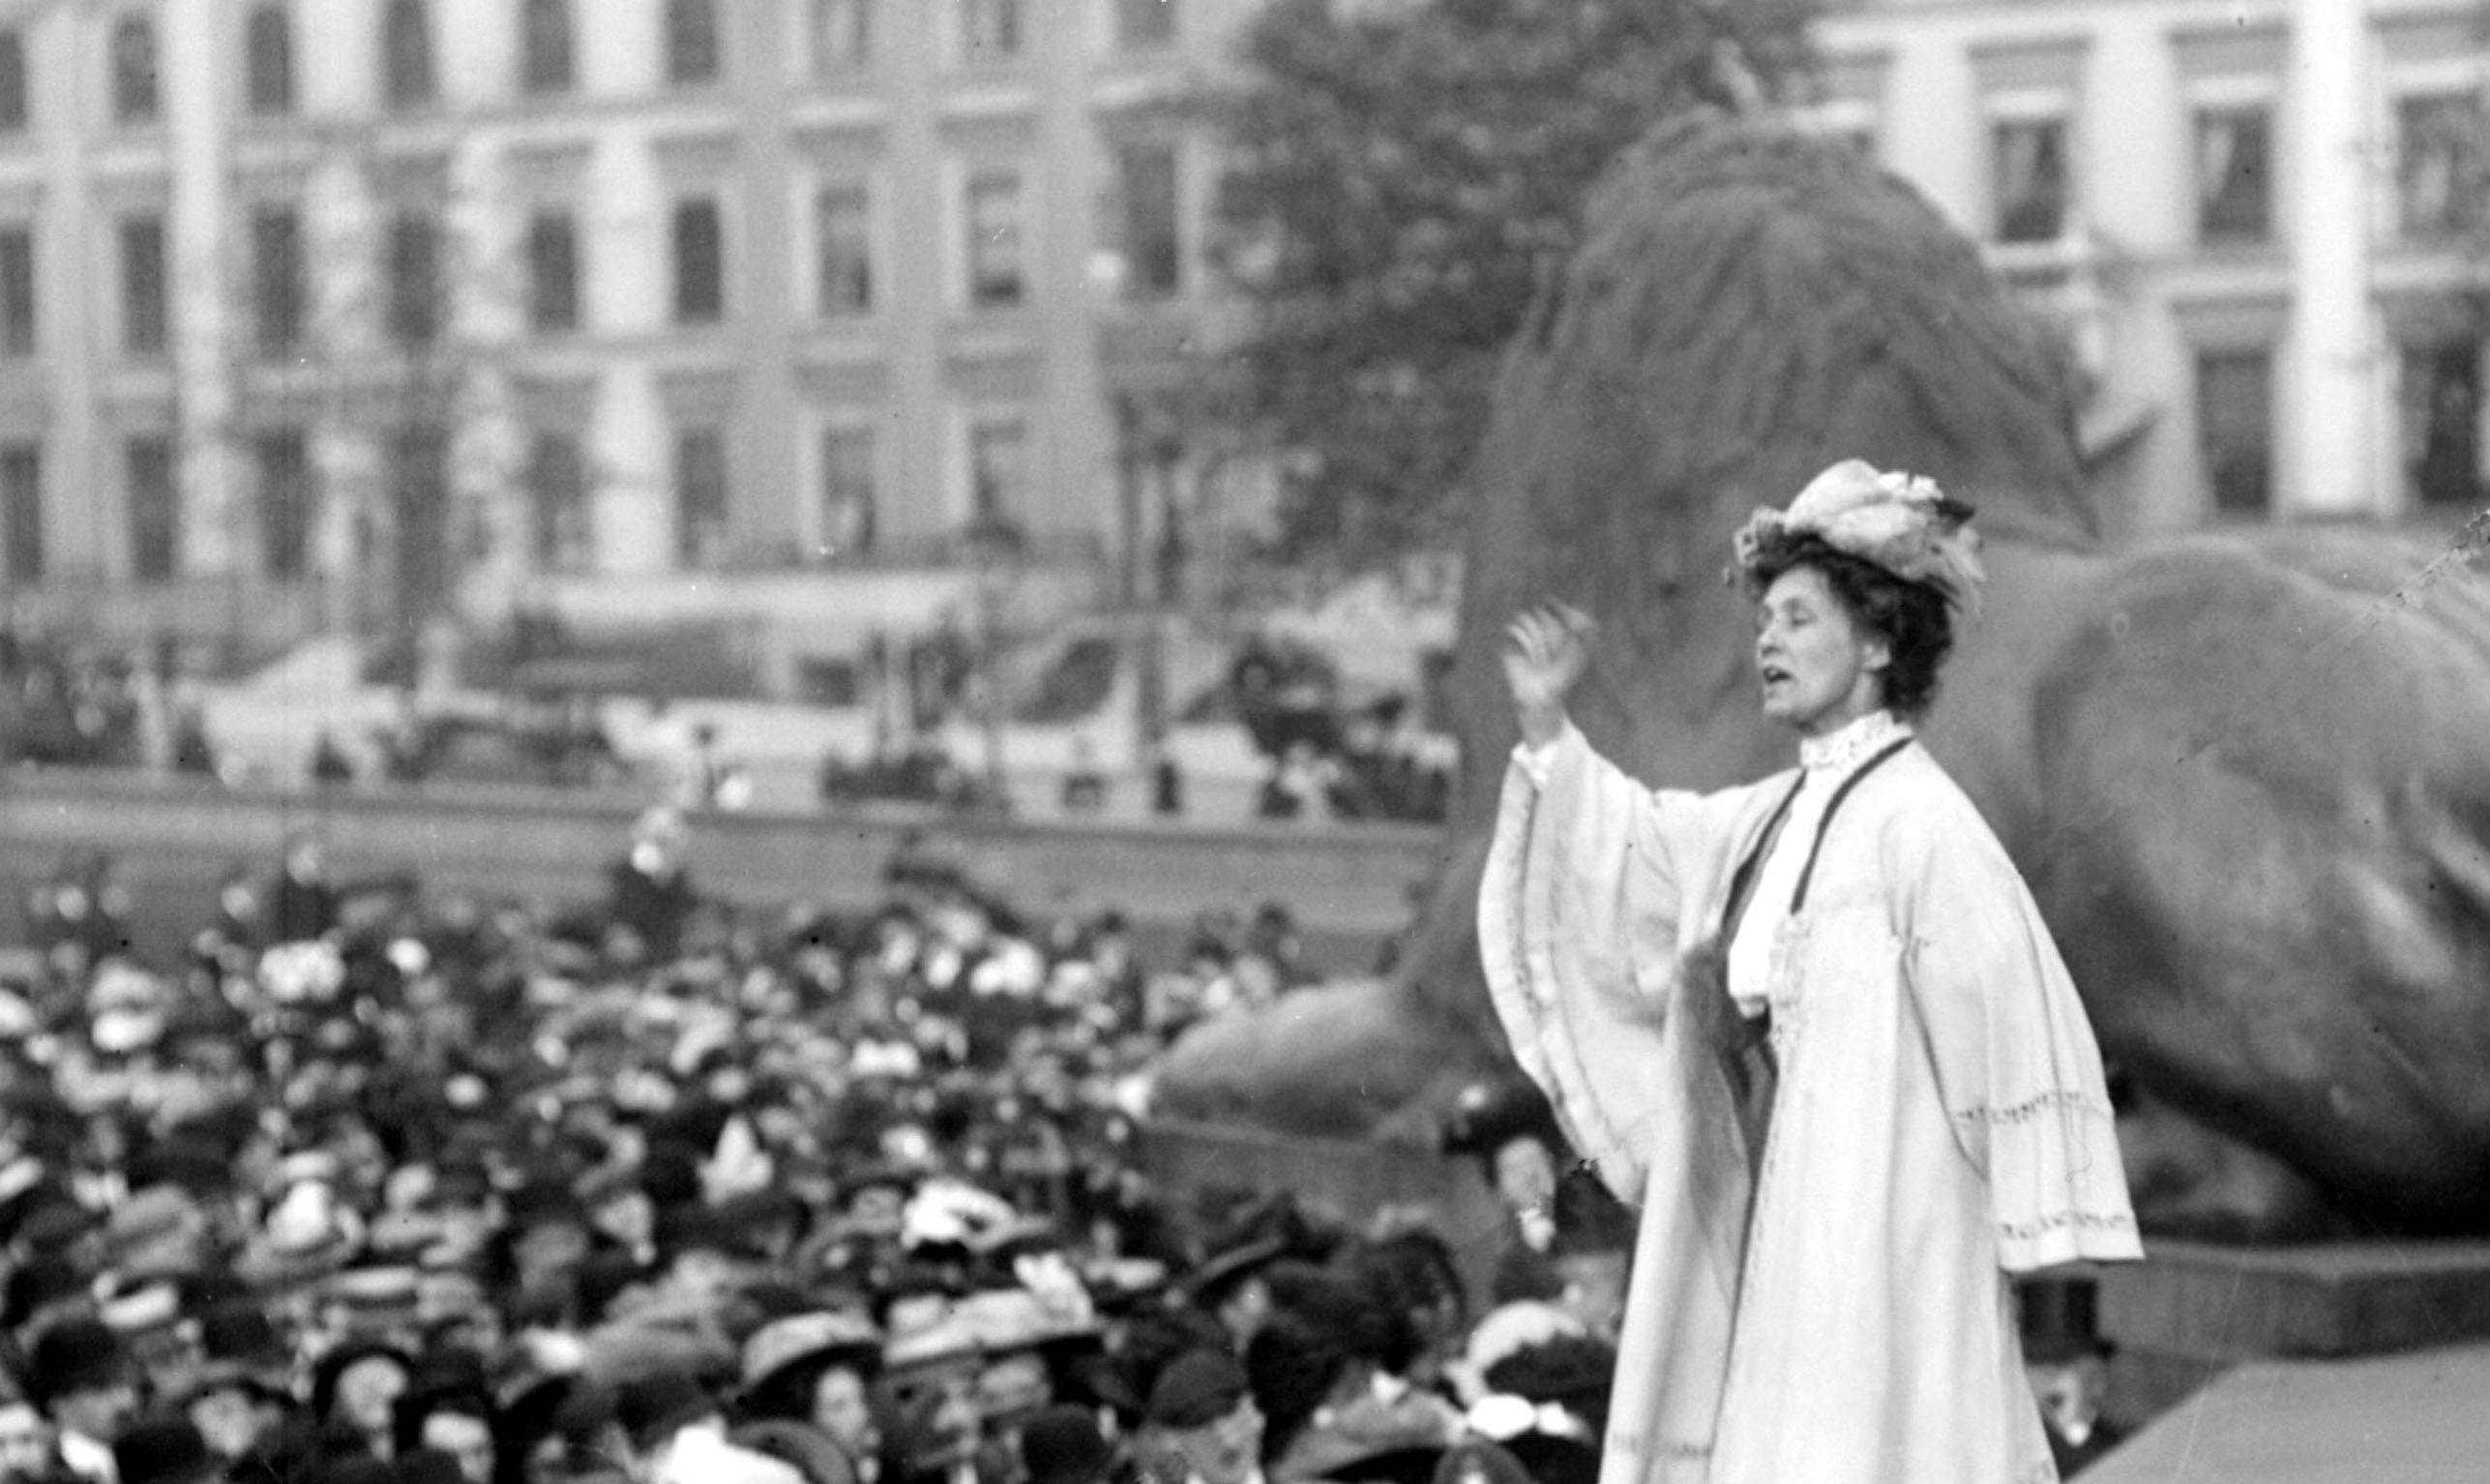 Sufferagette Emily Pankhurst addressing a meeting in London's Trafalgar Square, 1908.